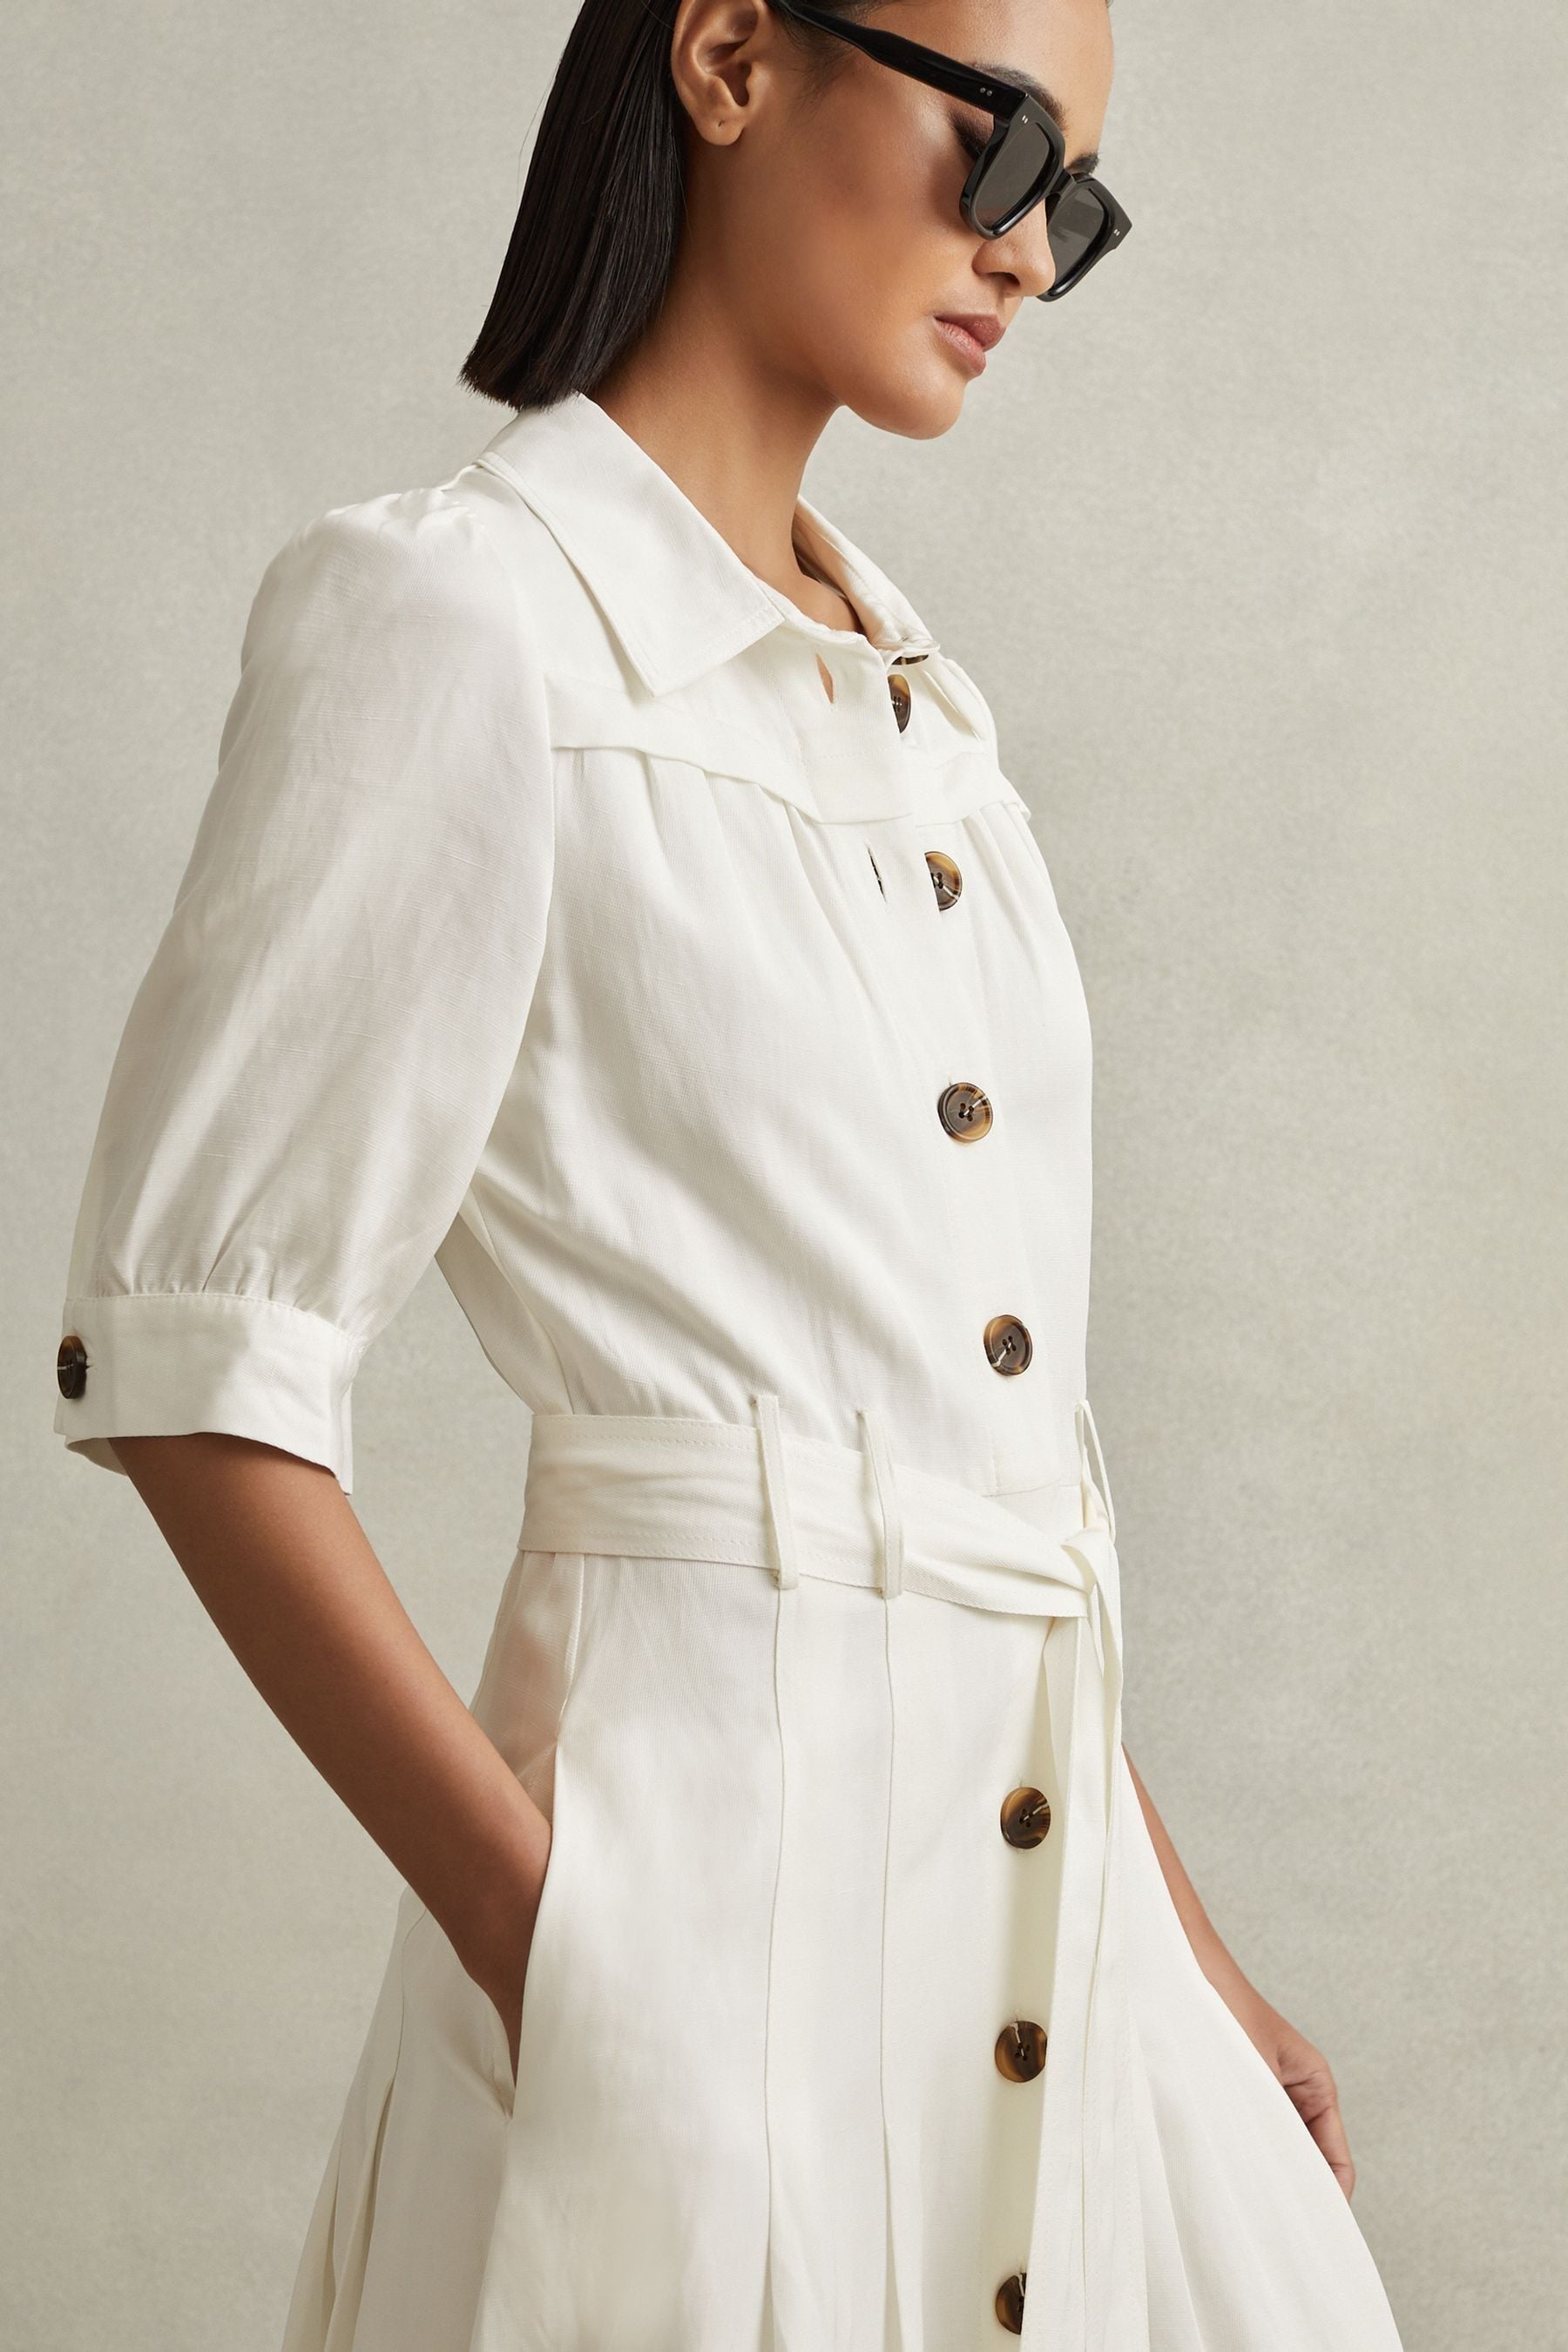 Reiss Malika - White Petite Belted Cap Sleeve Midi Dress, Us 6